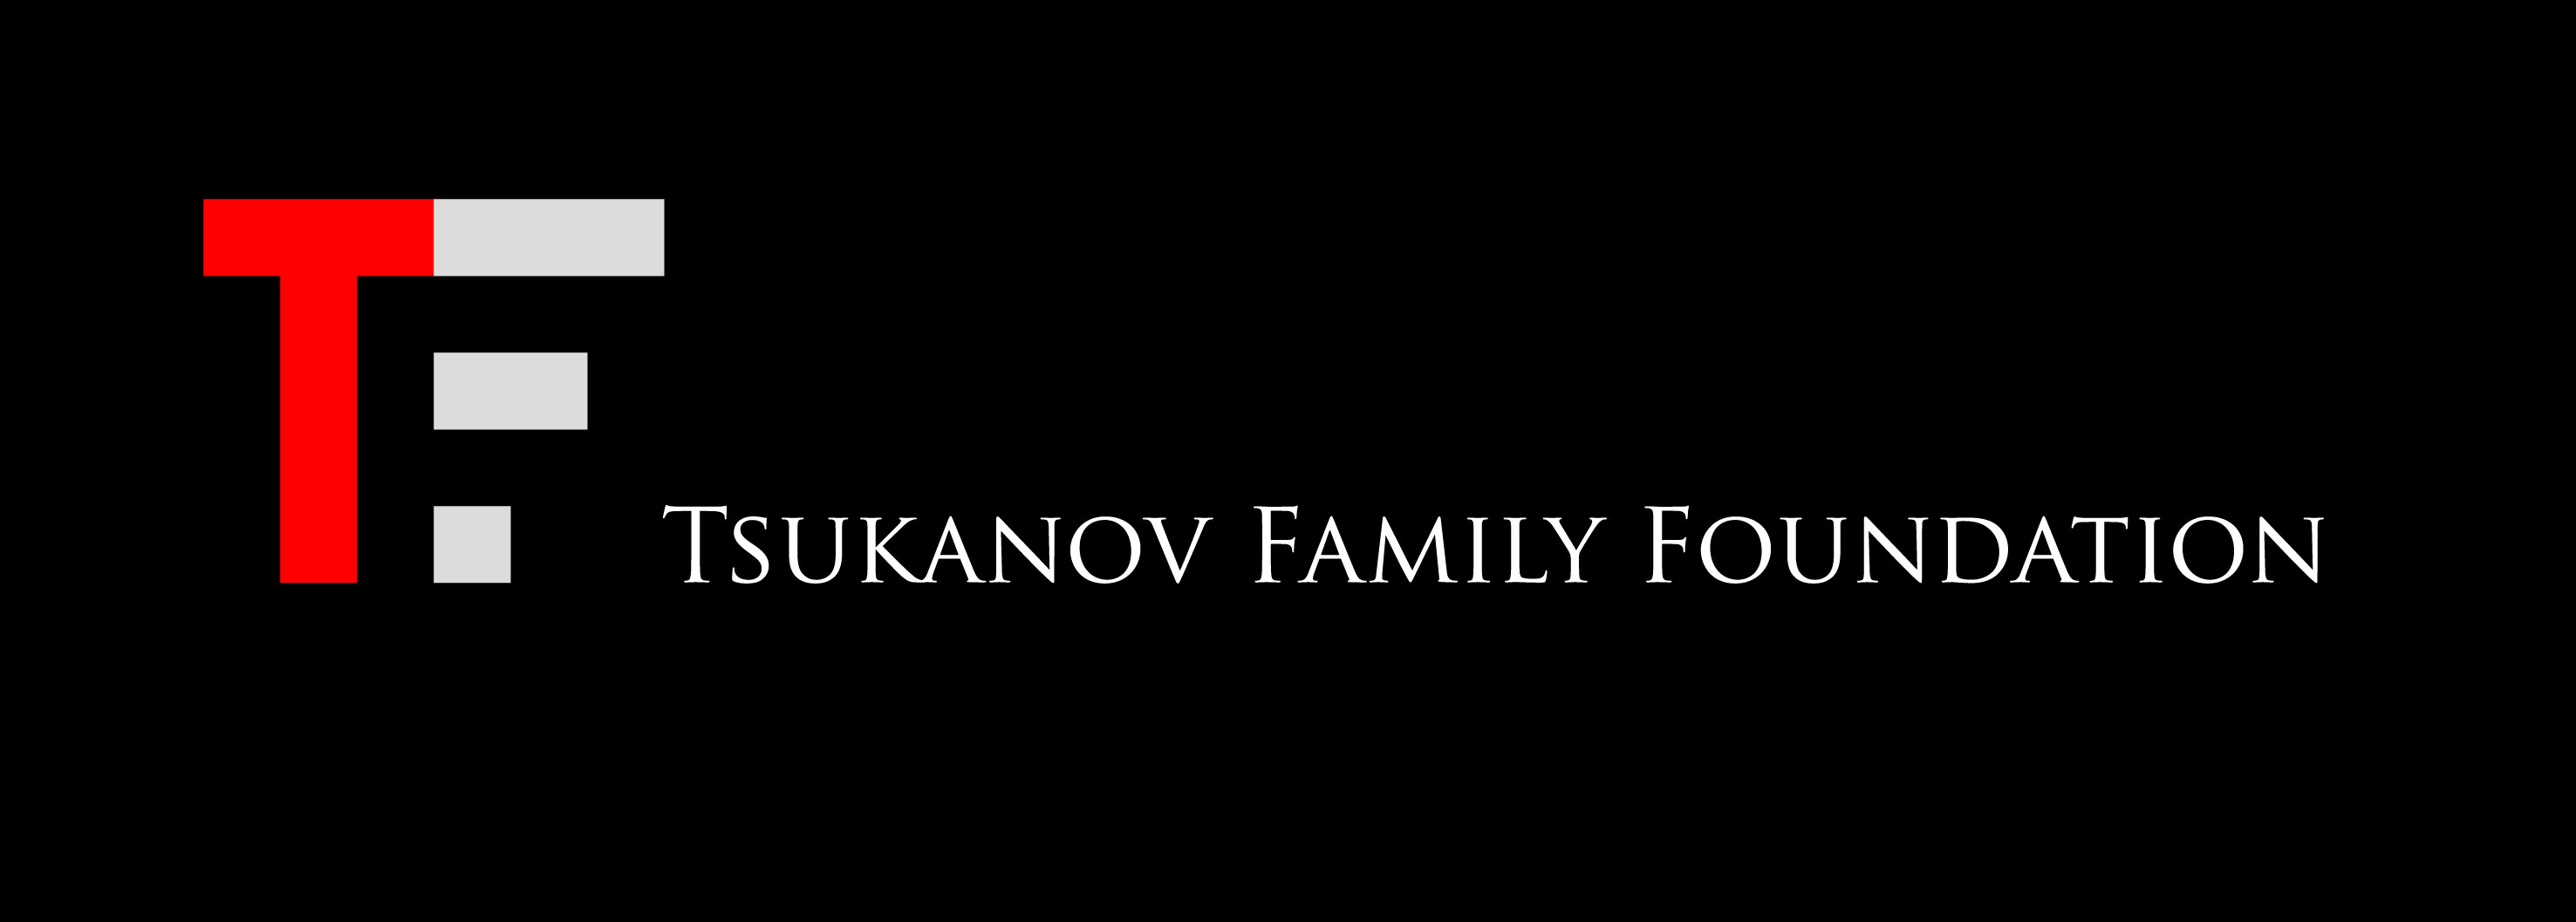 Tsukanov Family Foundation